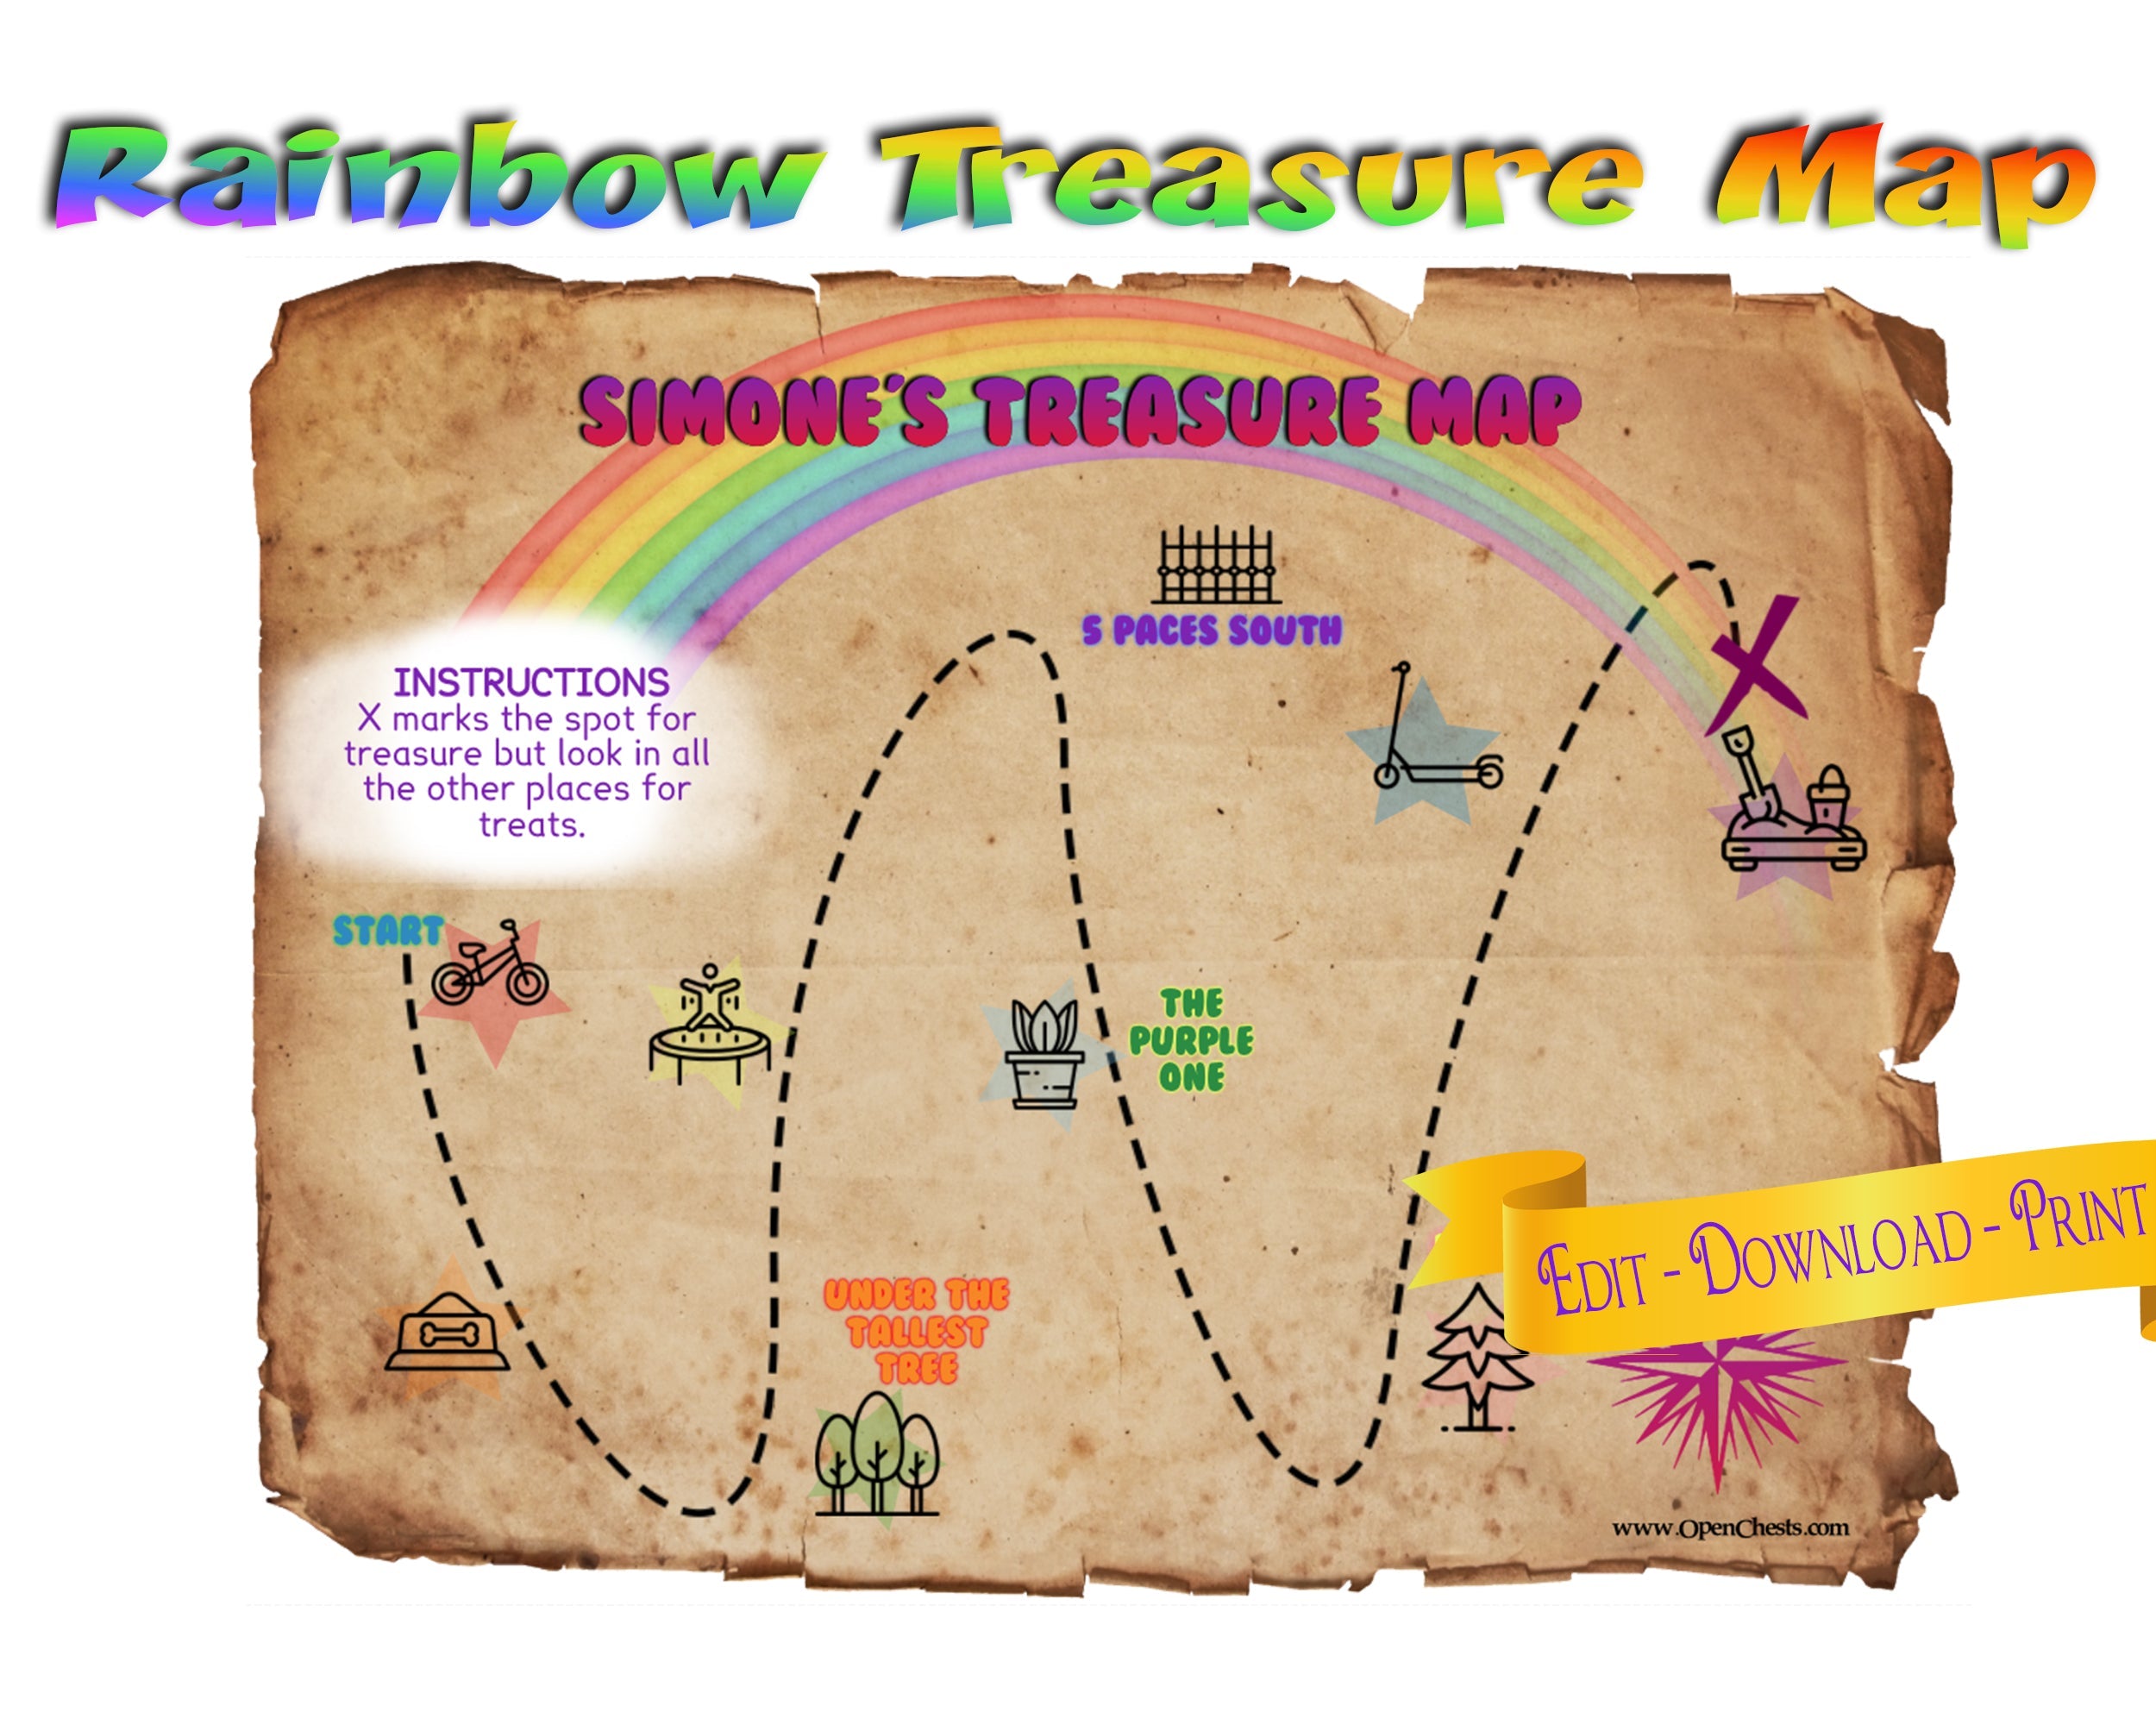 Rainbow party games - Birthday activity ideas - Treasure hunt 4 Kids